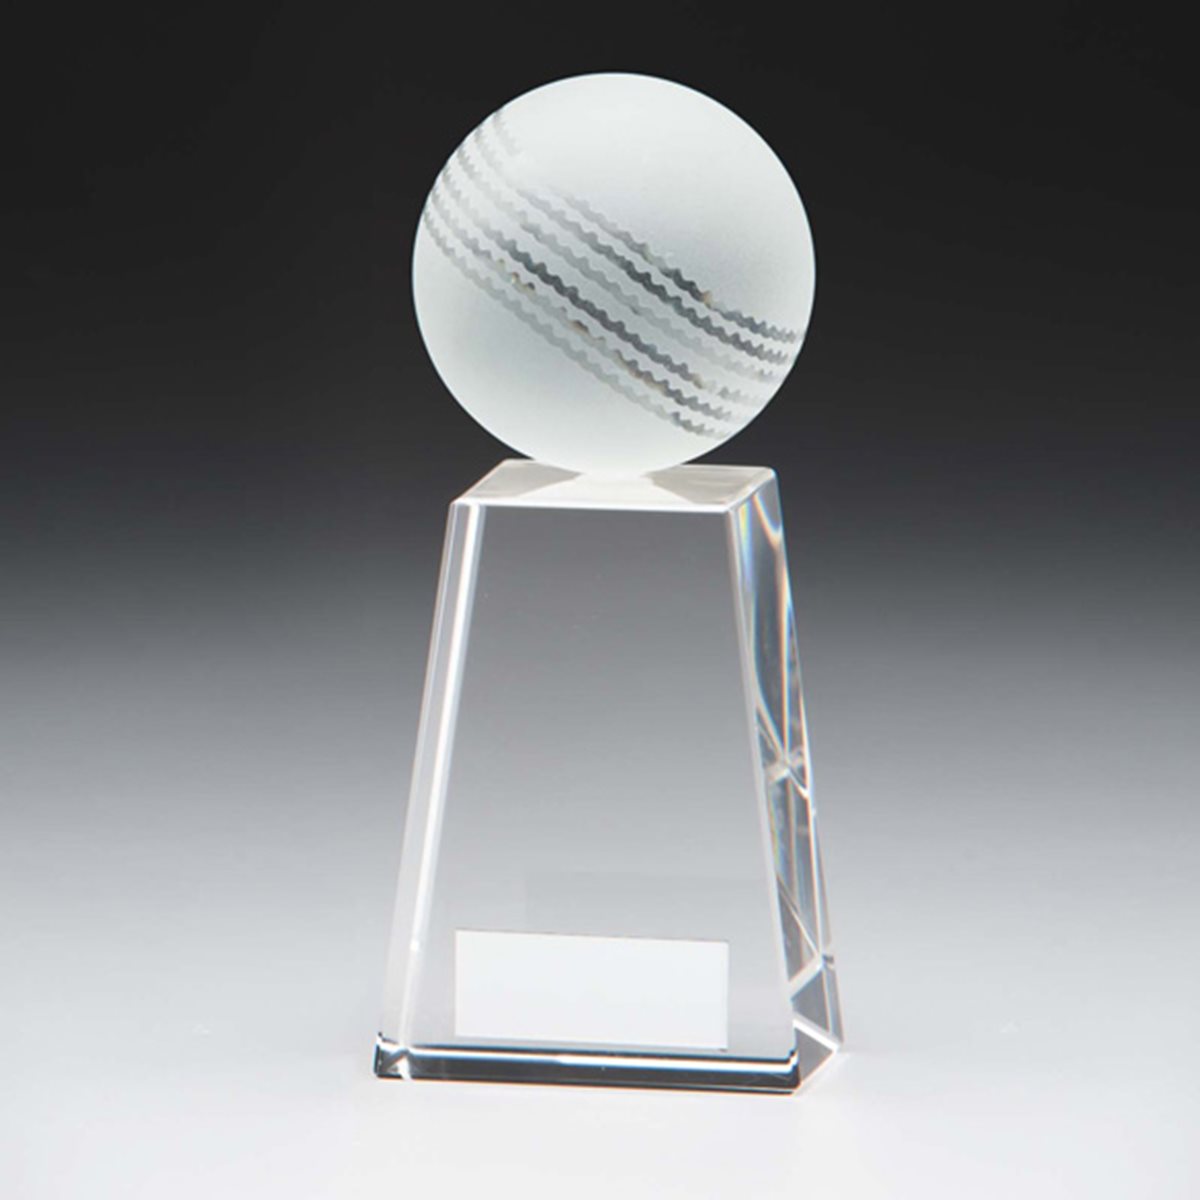 Voyager Cricket Crystal Award CR16208